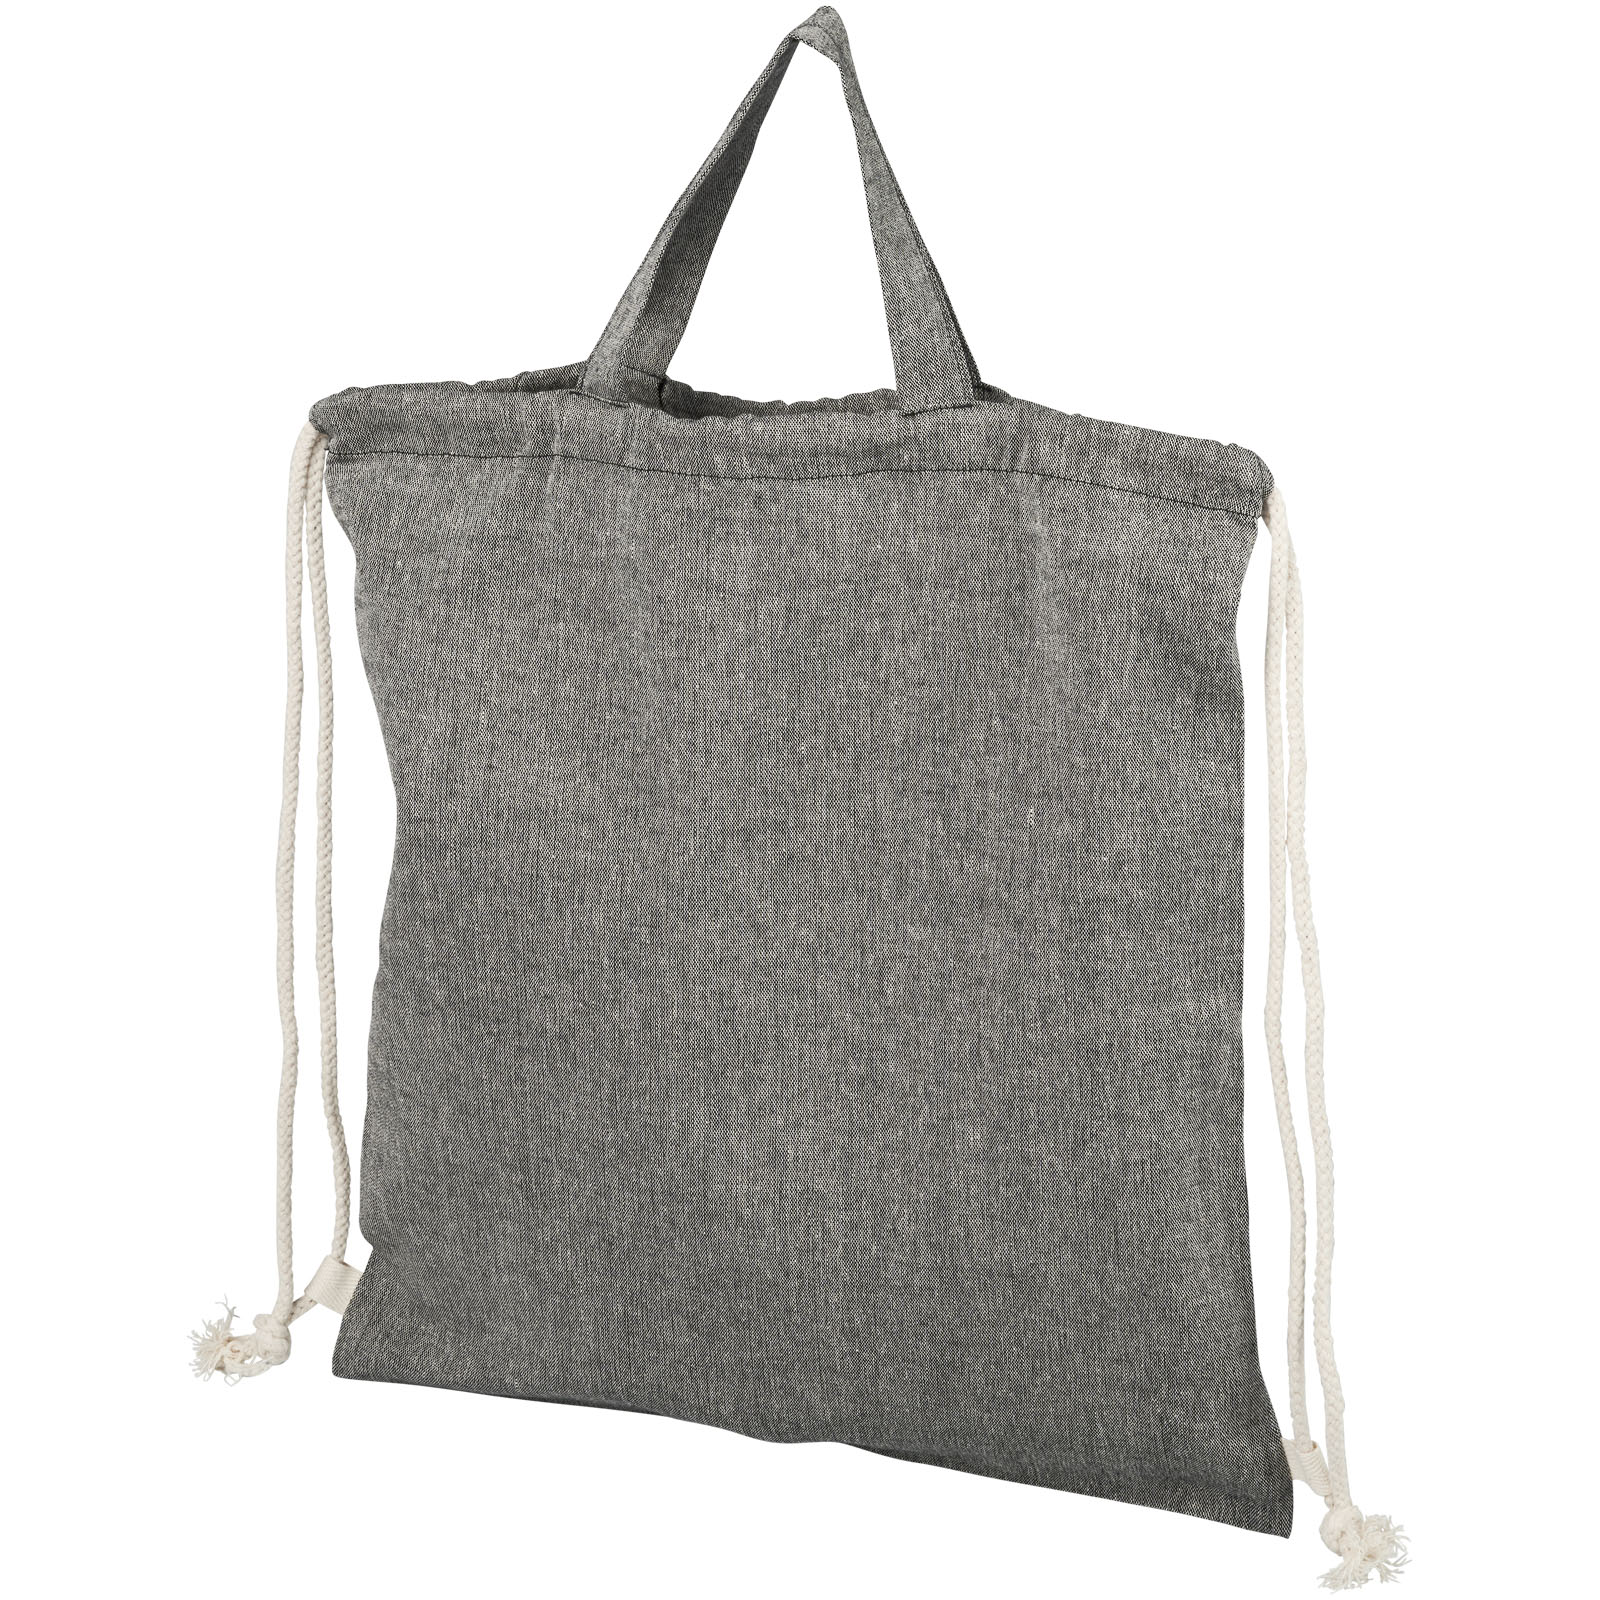 Advertising Drawstring Bags - Pheebs 150 g/m² recycled drawstring bag 6L - 0